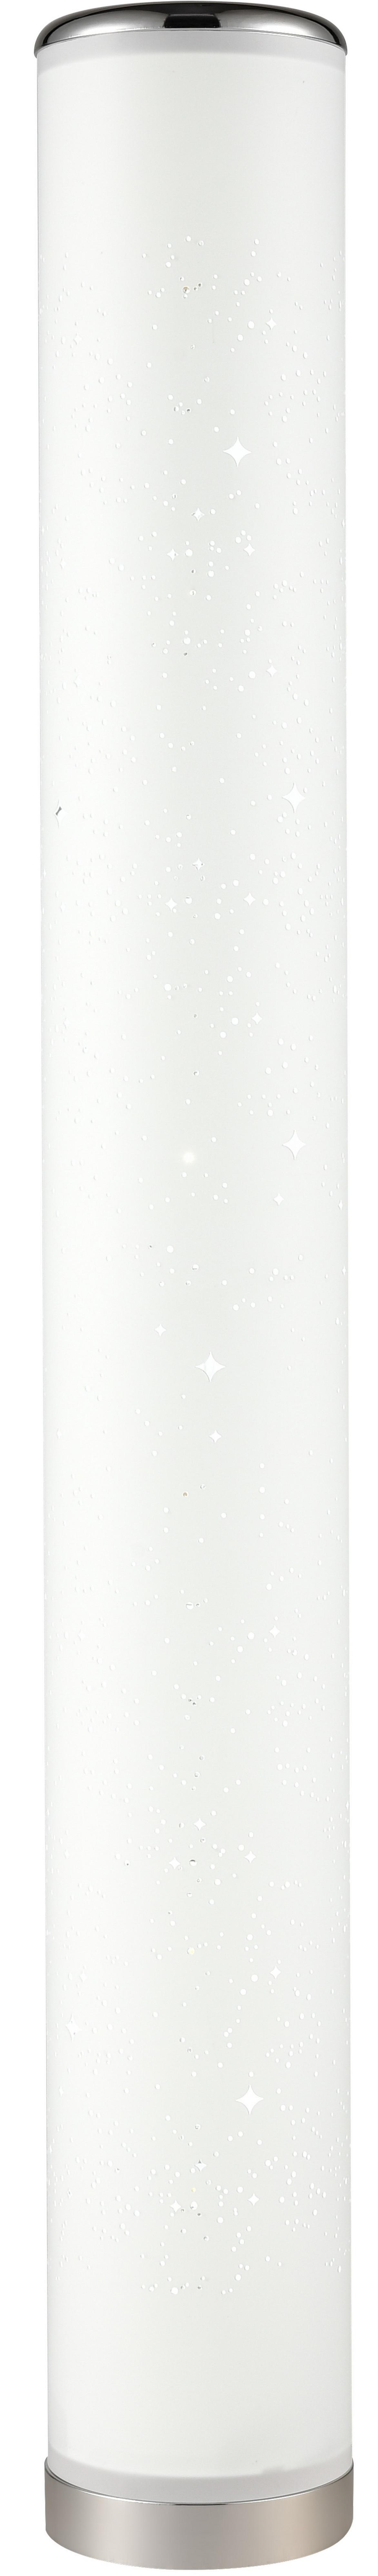 Asztali Lámpa Macic - Fehér, Lifestyle, Műanyag (13/54cm) - Modern Living